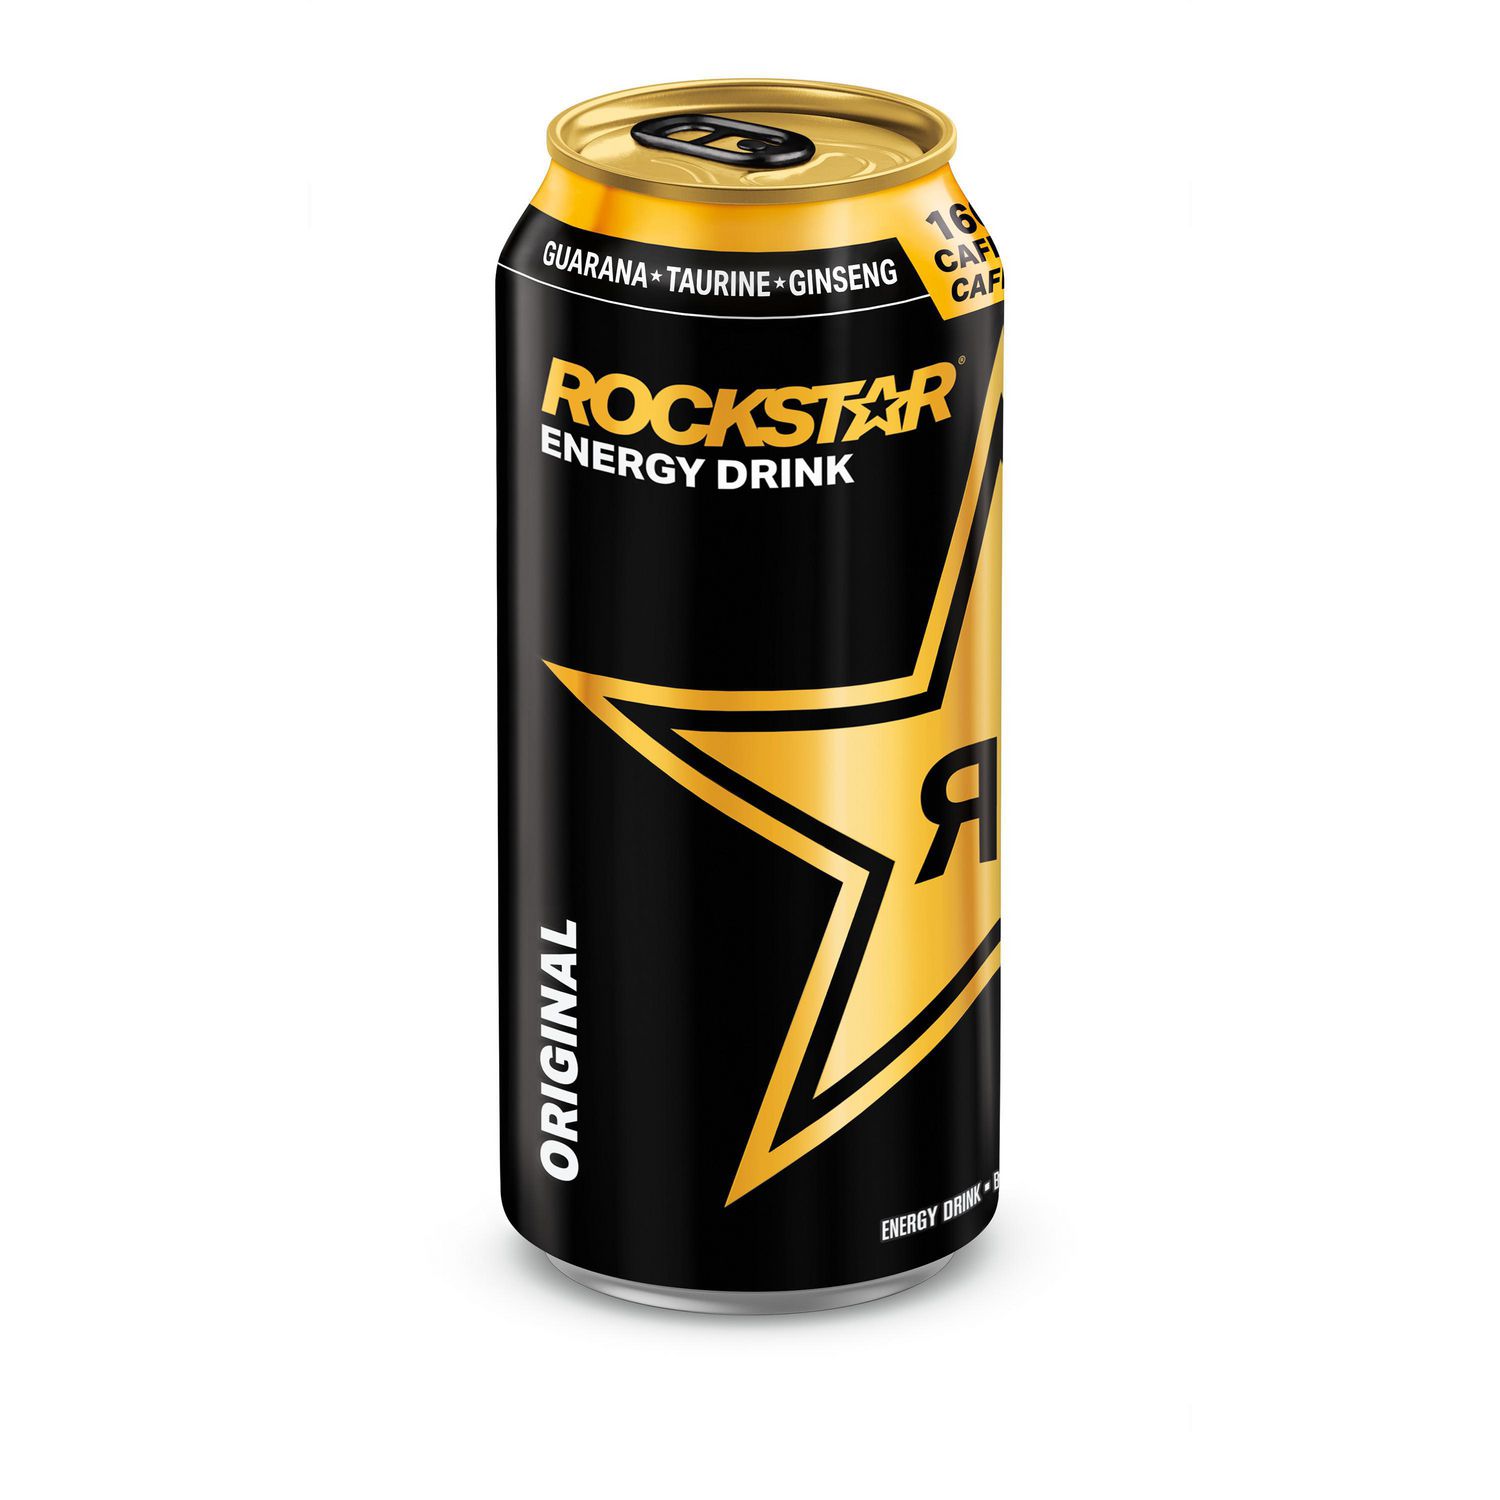 Rockstar Original Energy Drink 473ml Can Walmart Canada 